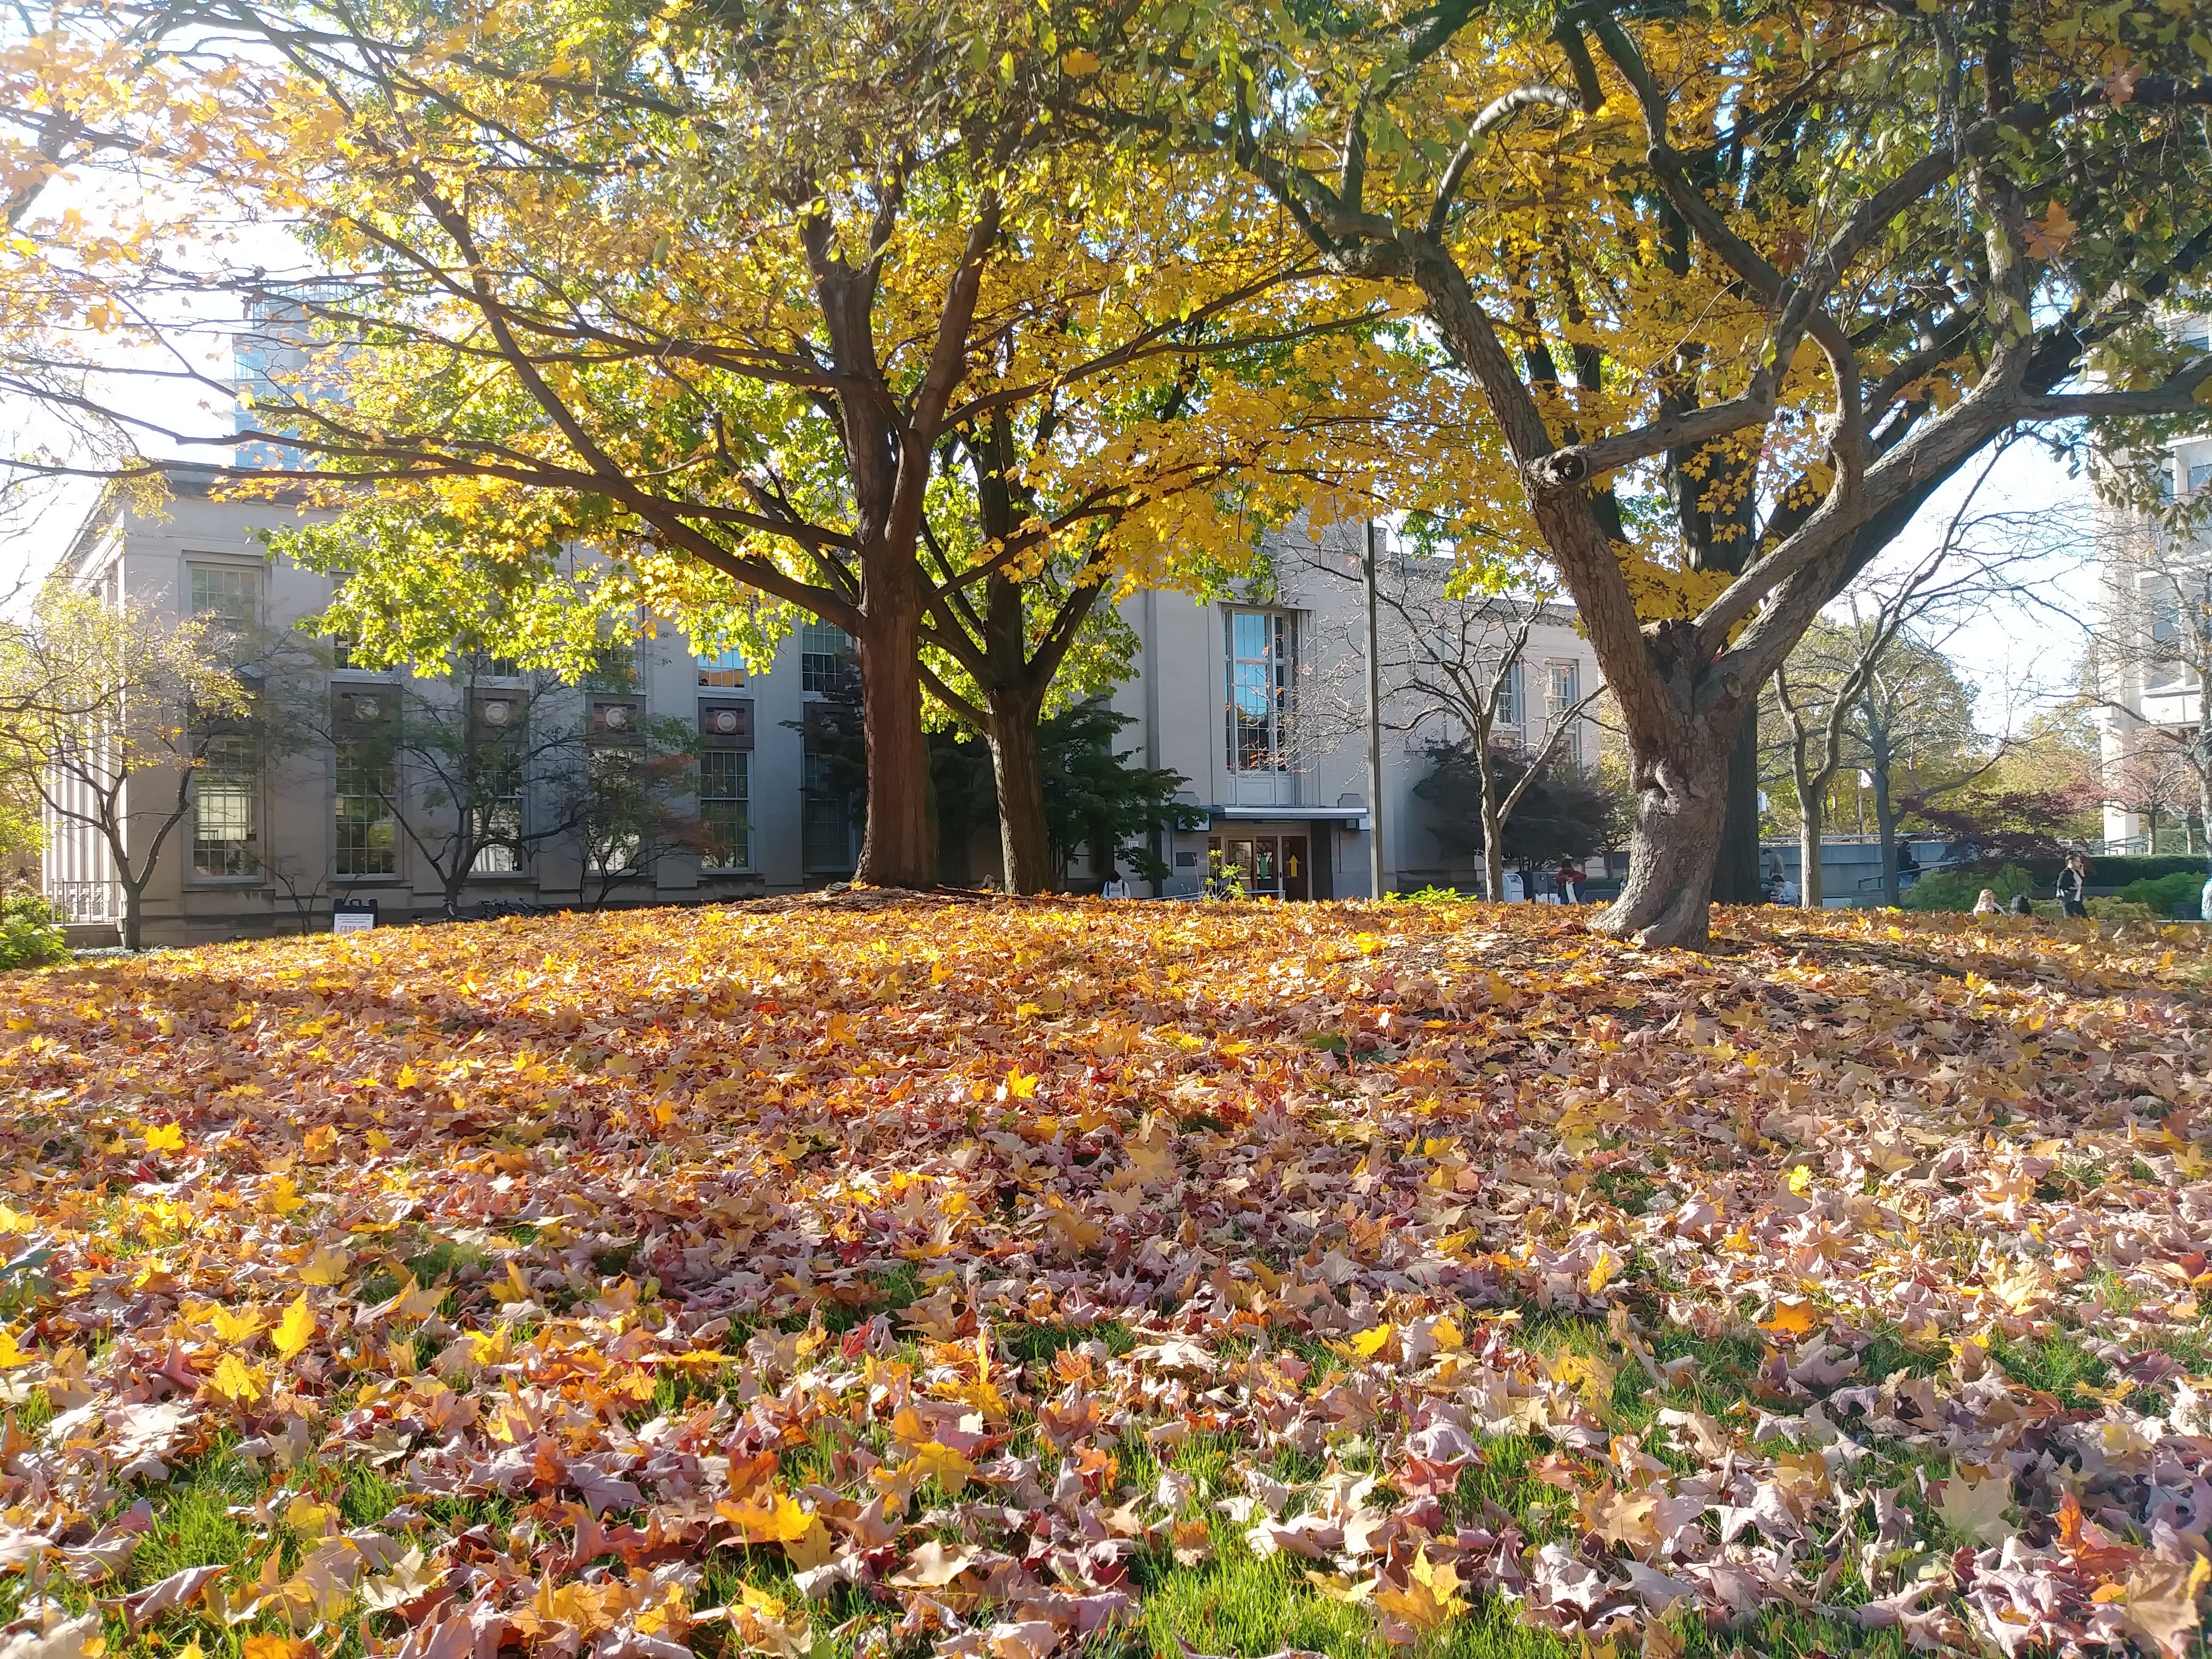 Tomlinson Hall on Main Quad behind colorful autumn leaves November 2021